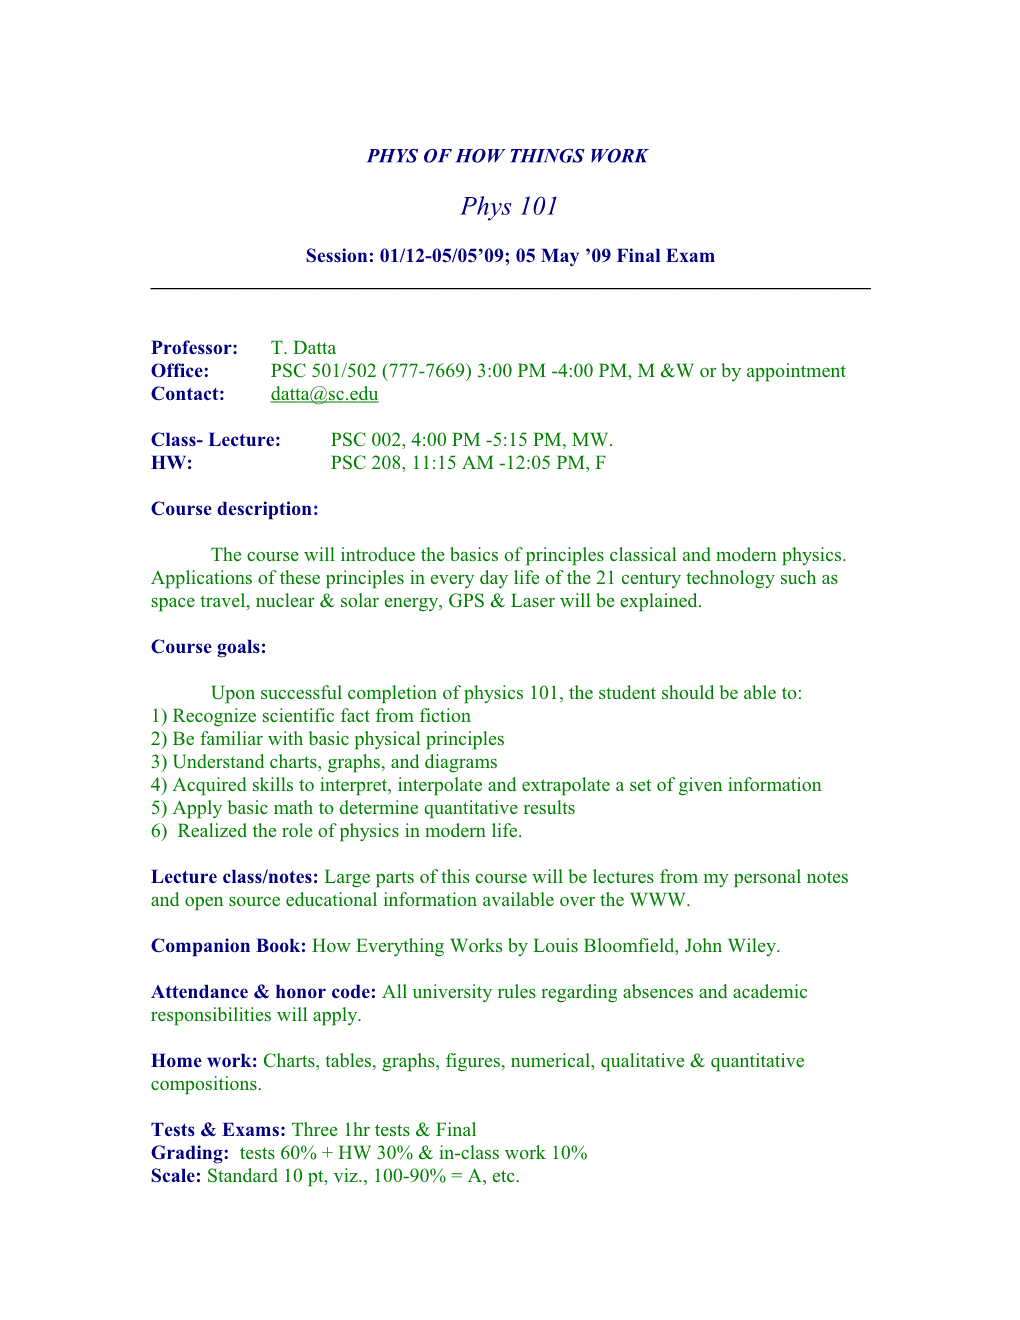 Fall 2005, Phys 201, General Physics-1